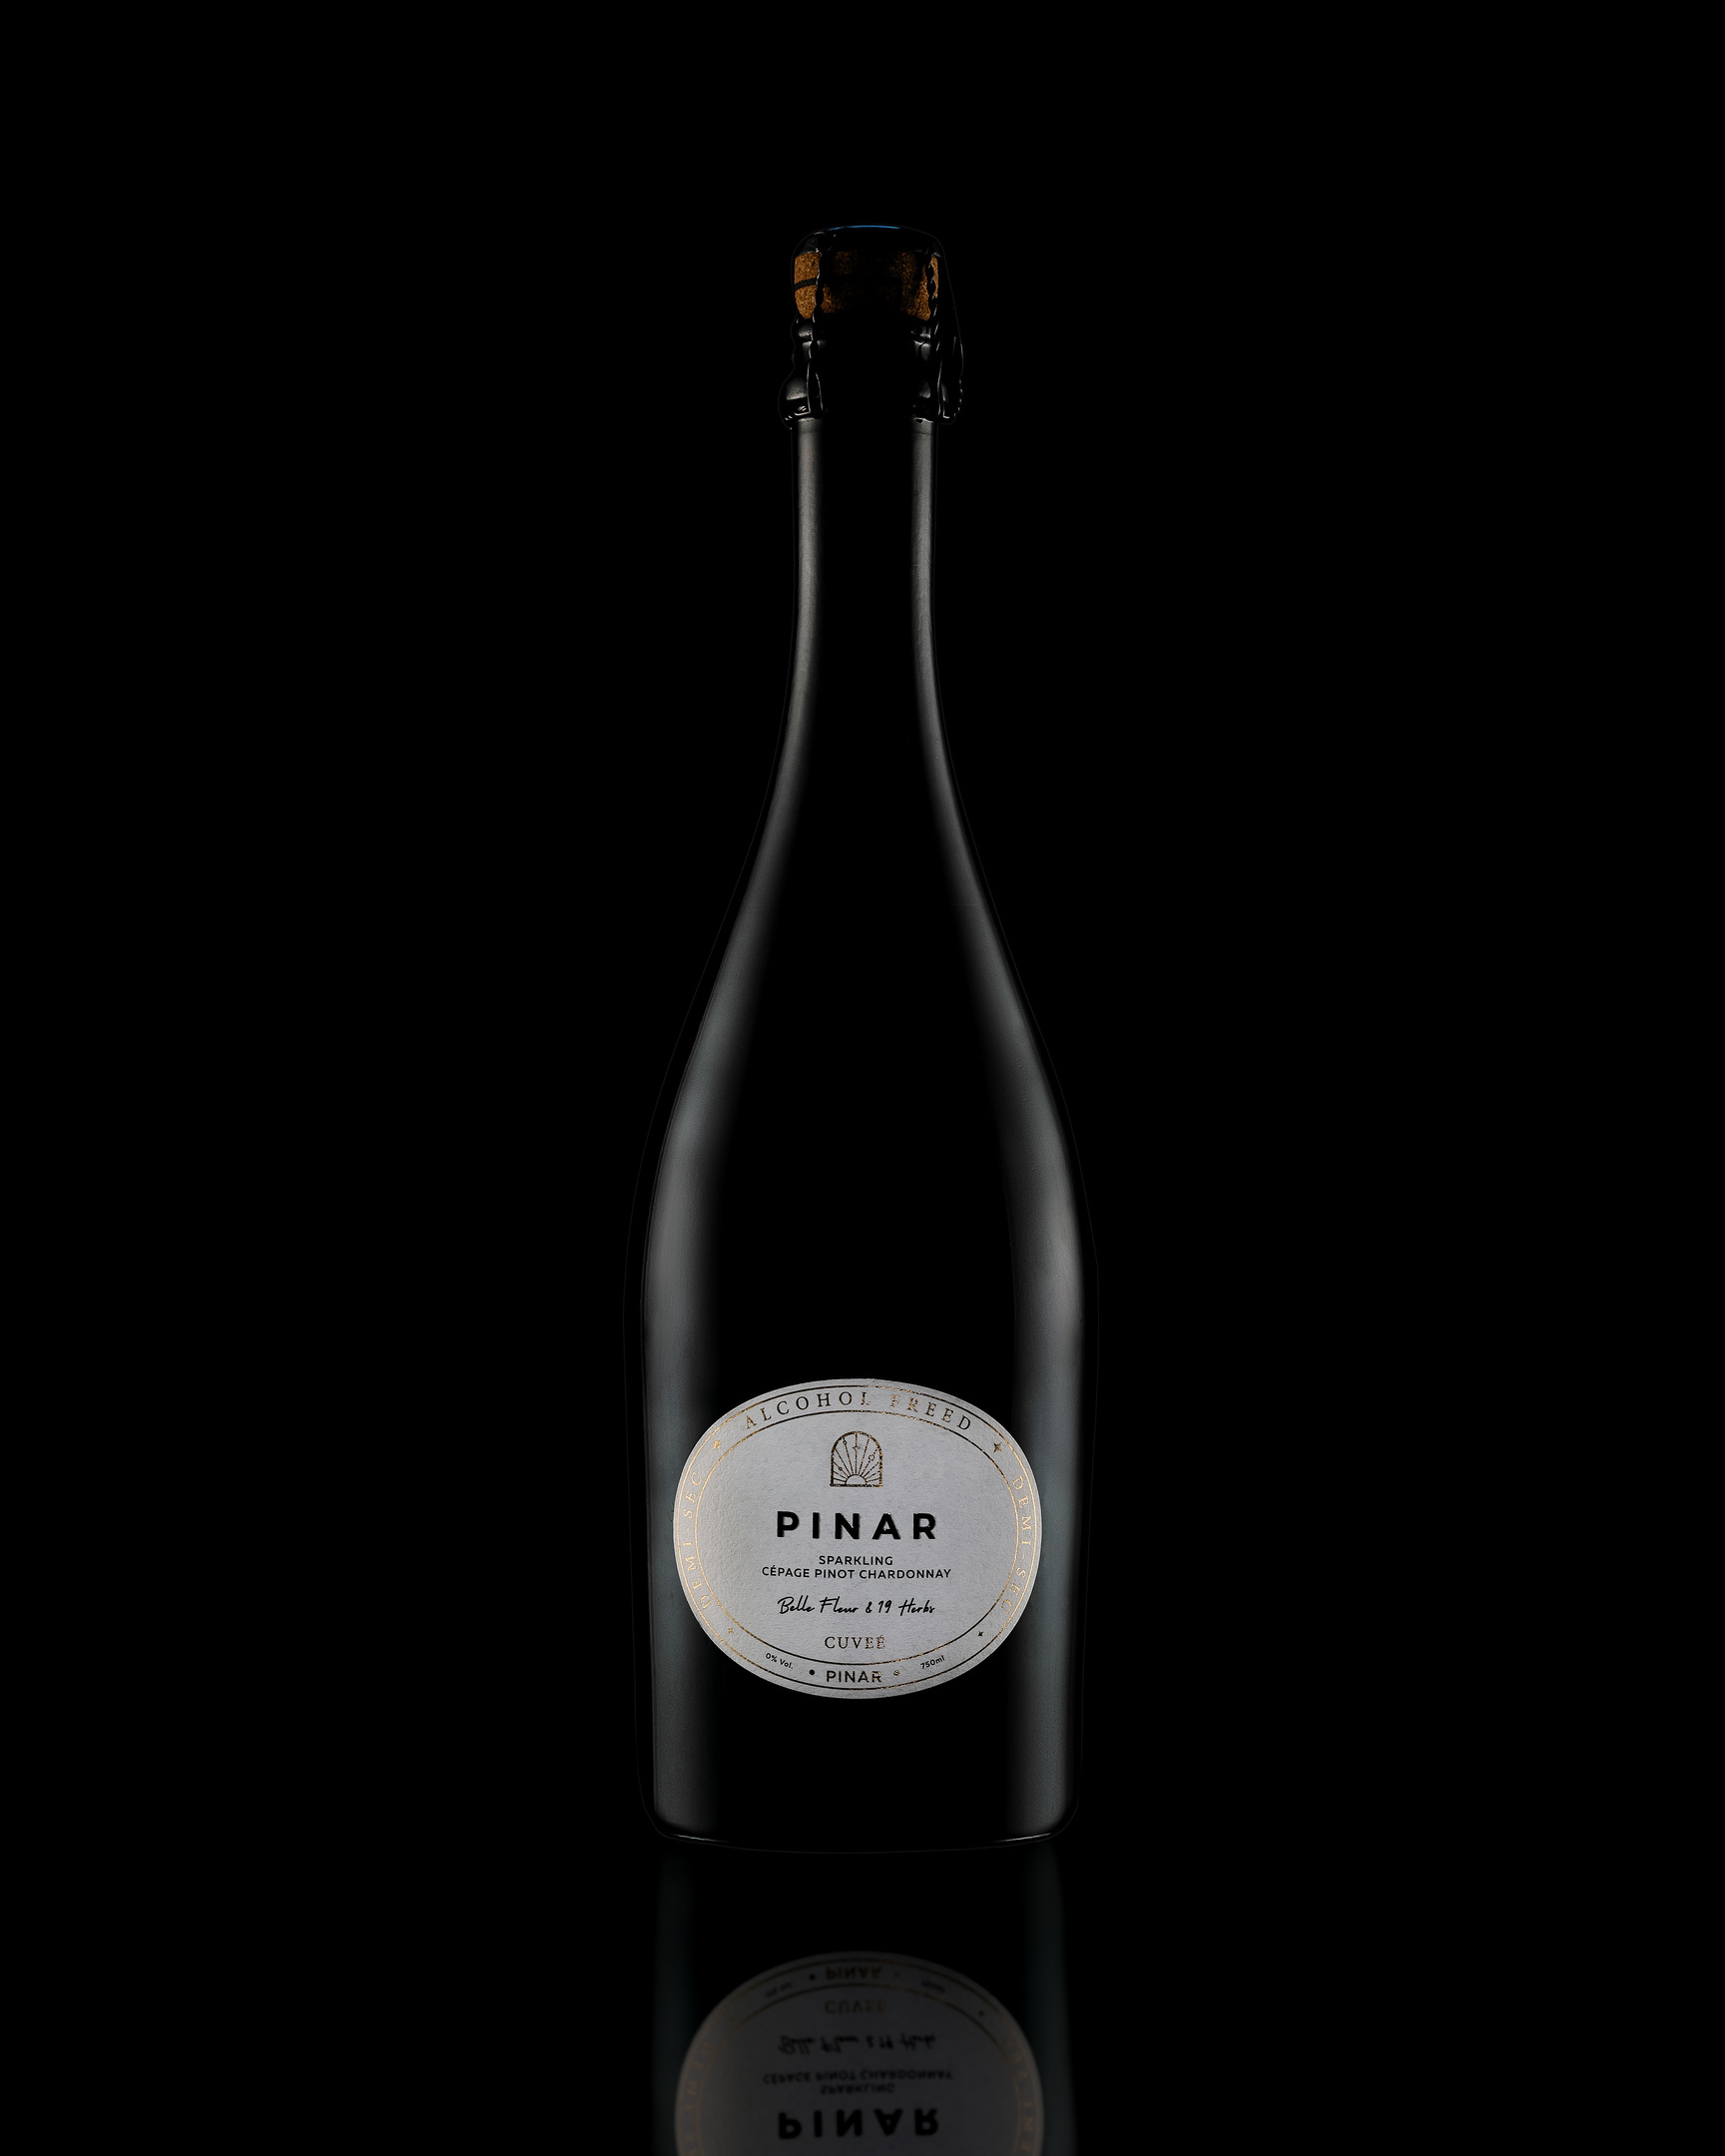 PINAR - Sparkling Cepage Pinot Chardonnay. Бутилка безалкохолно (0%) вино PINAR със сенки и отражение на черен фон.